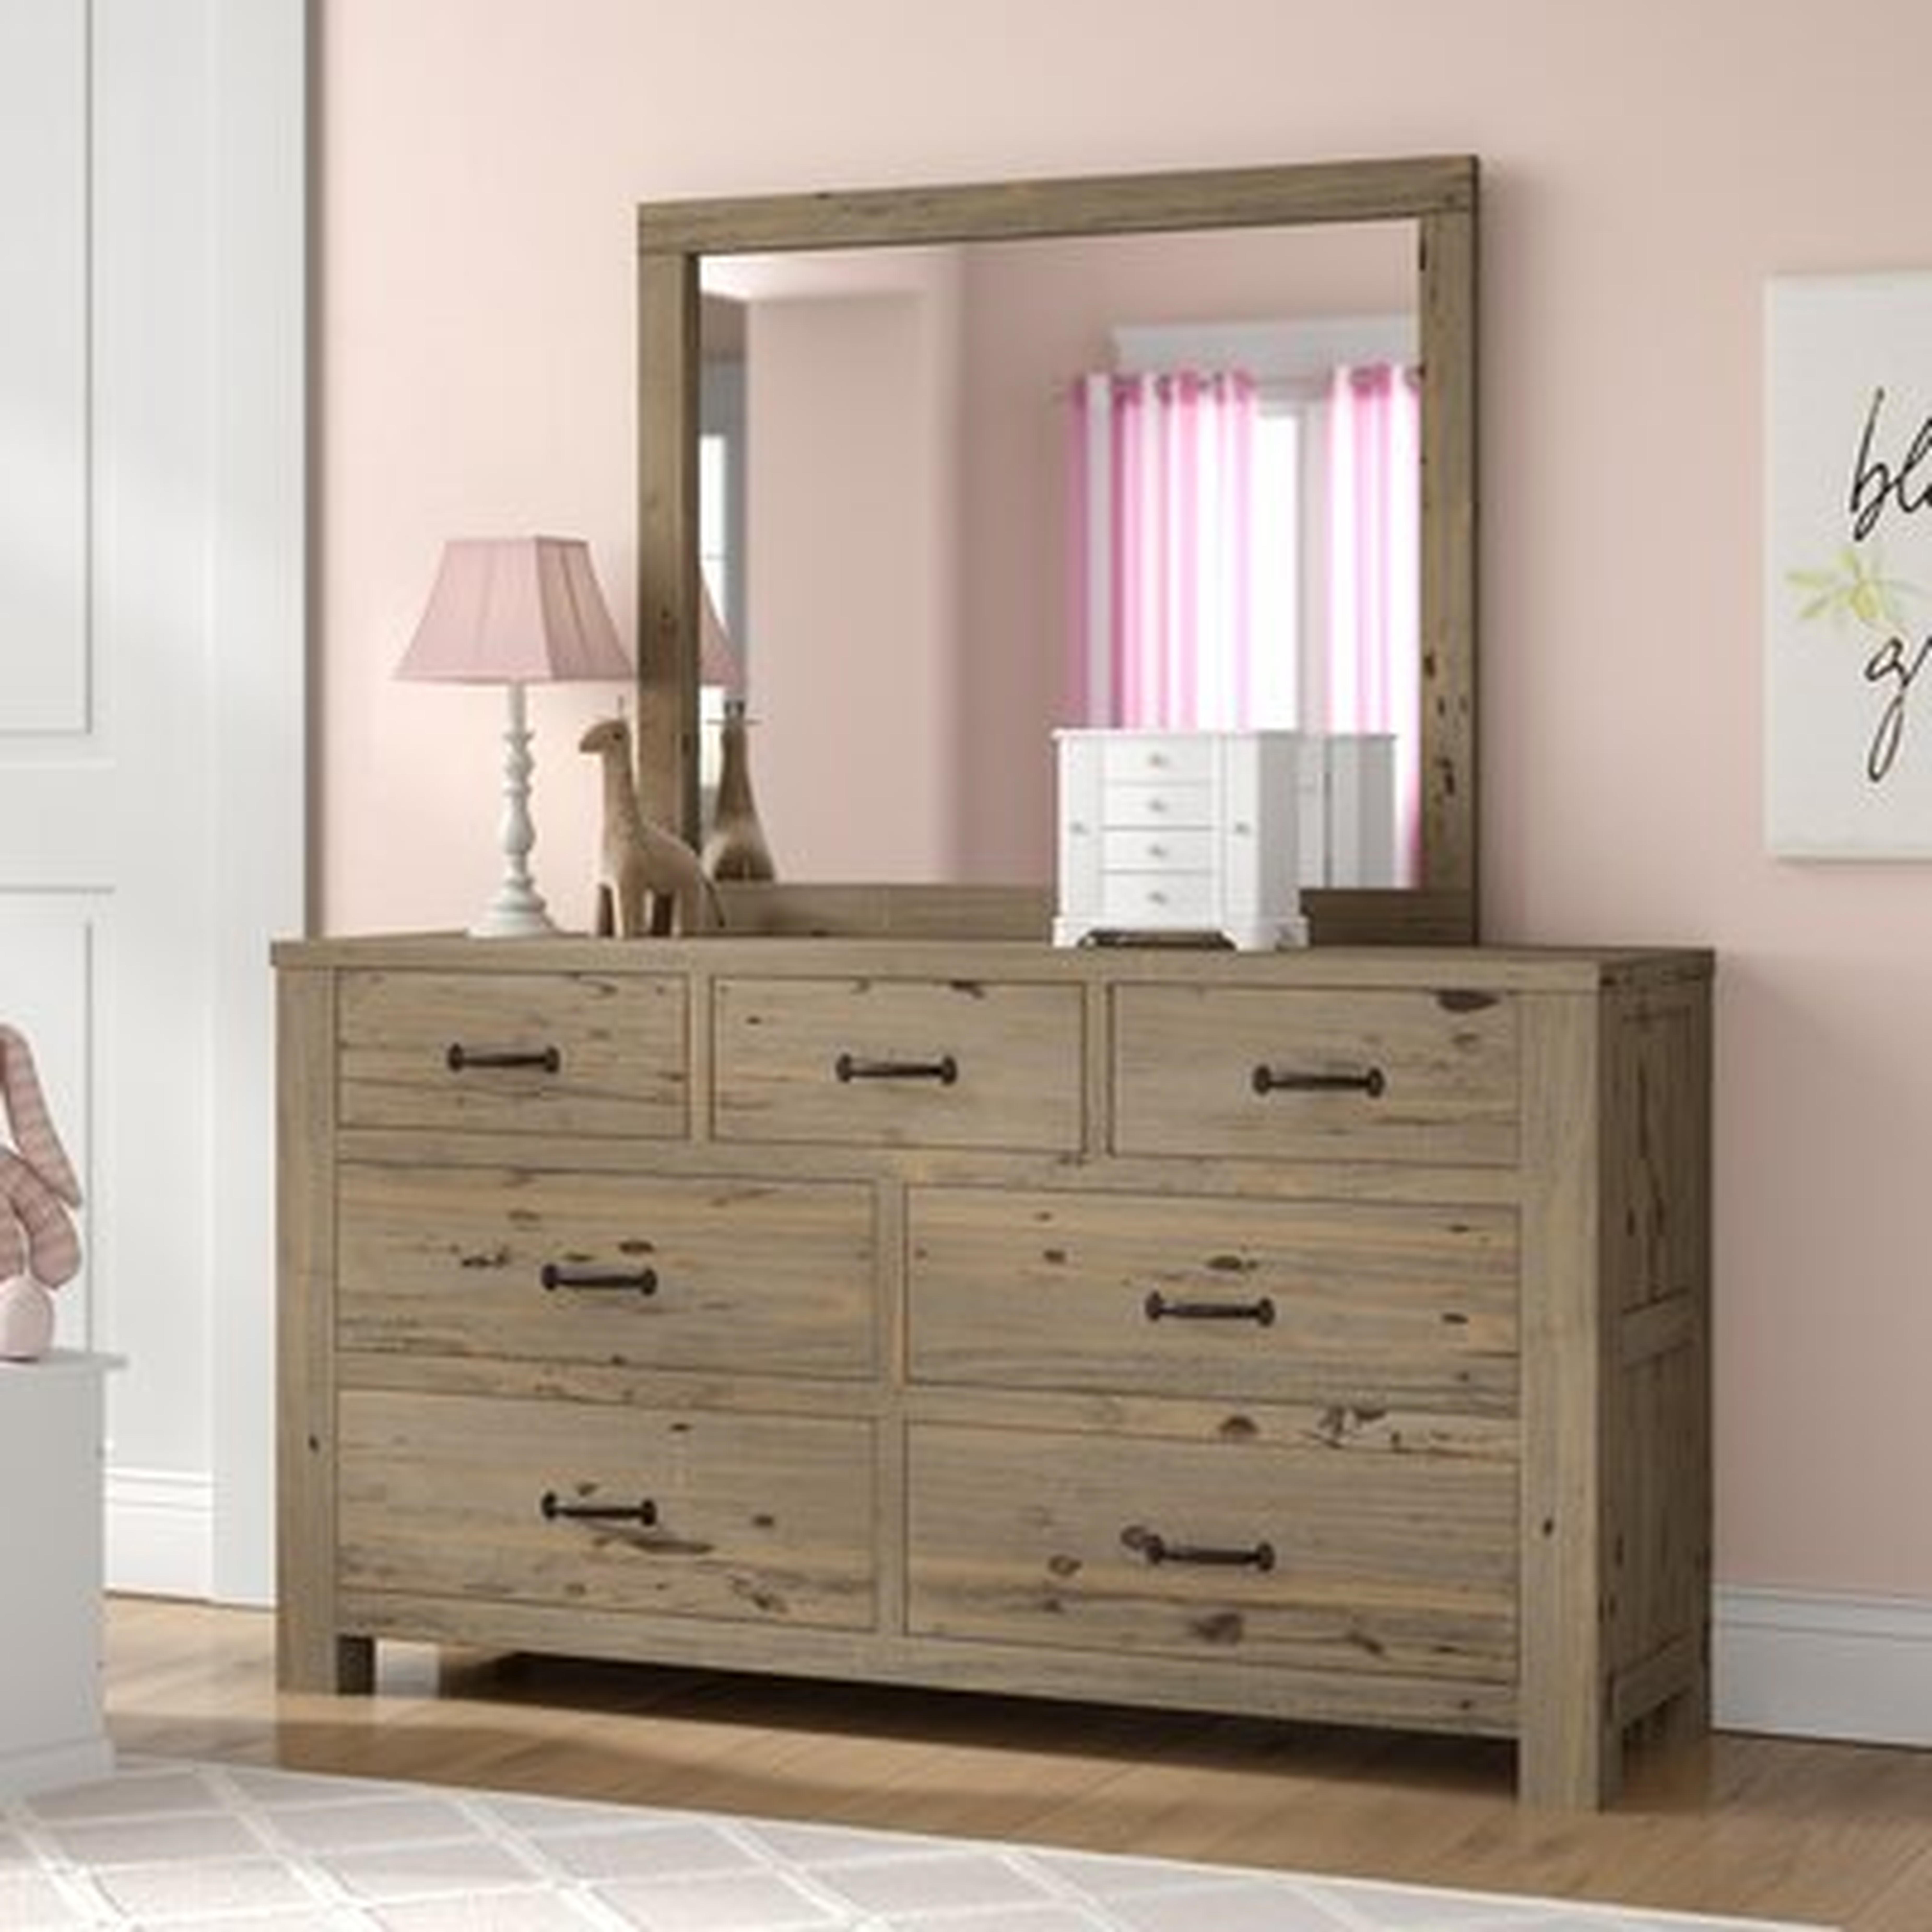 Bedlington 7 Drawer Solid Wood Double Dresser with Mirror - Wayfair